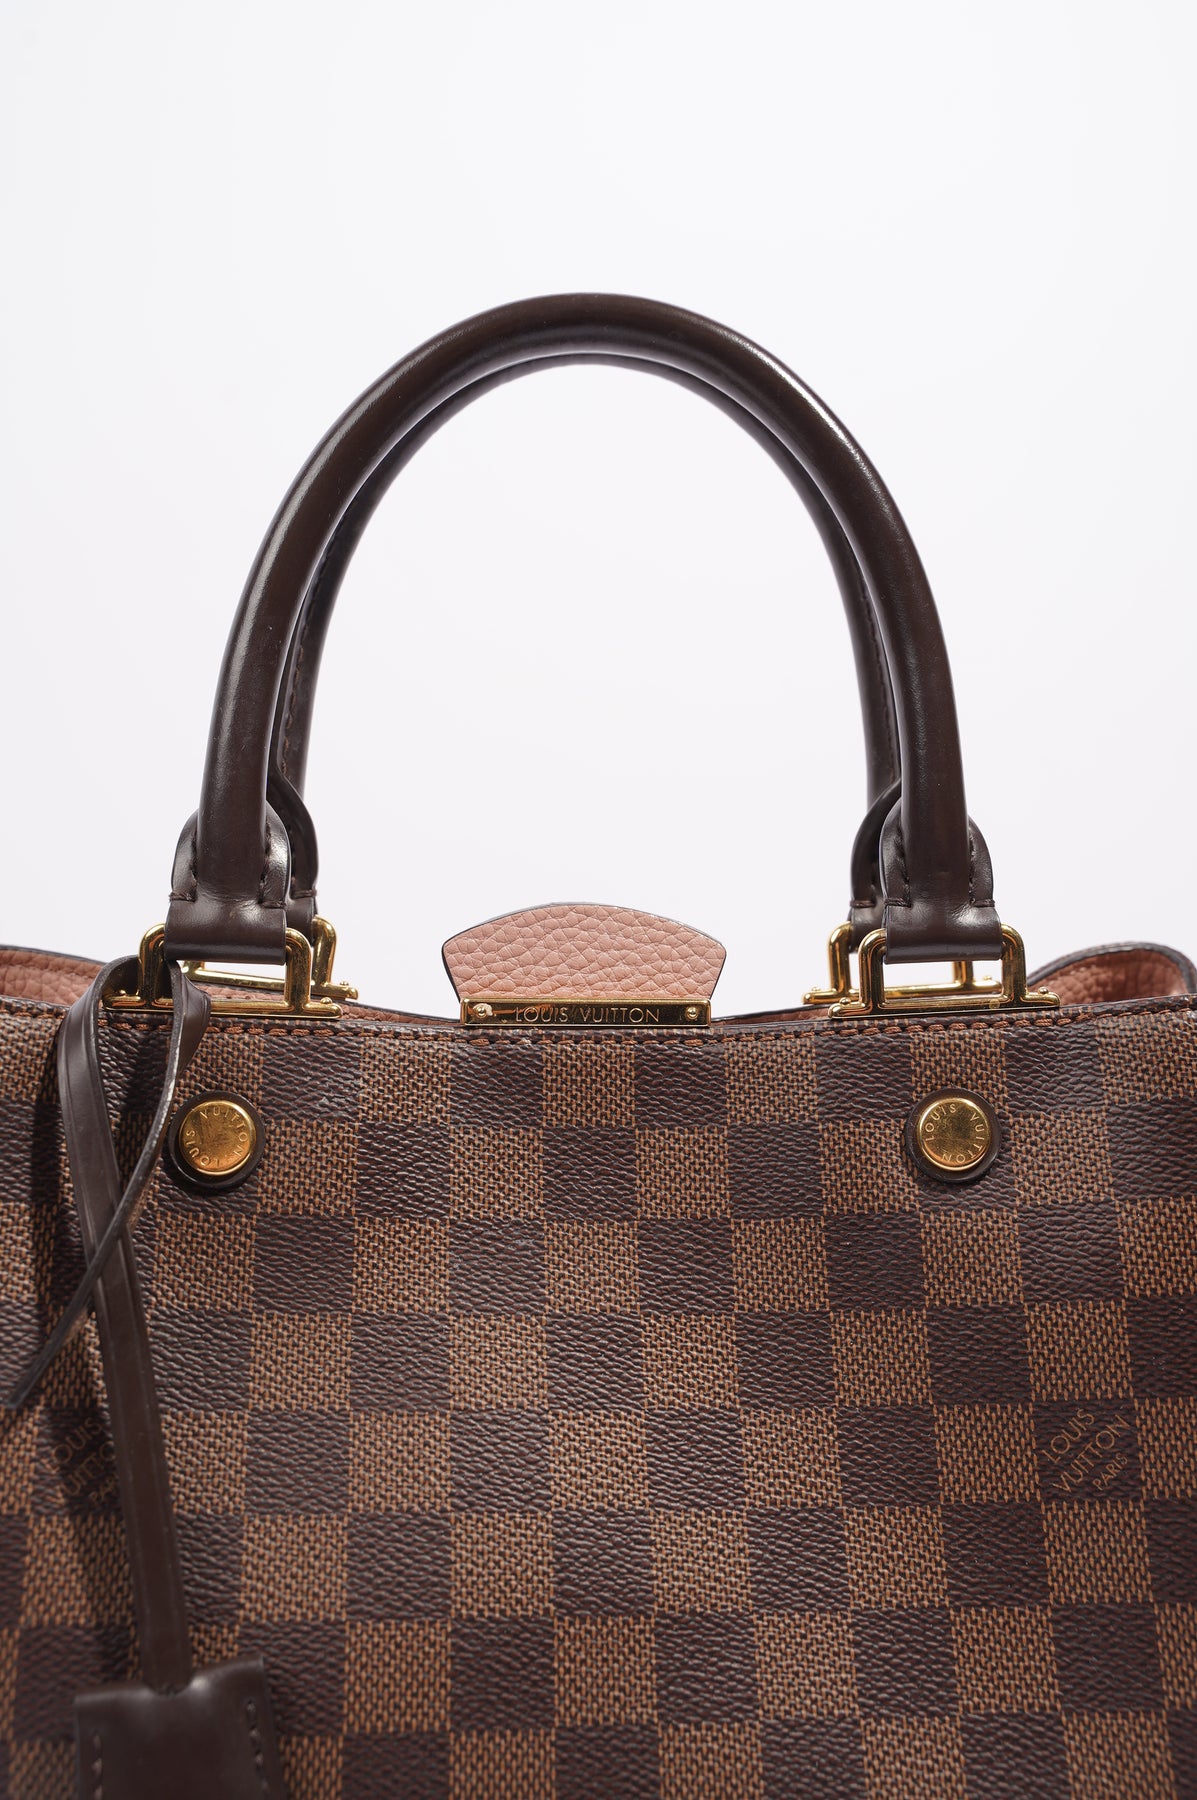 Louis Vuitton Womens Brittany Handbag Damier Ebene / Rose – Luxe Collective